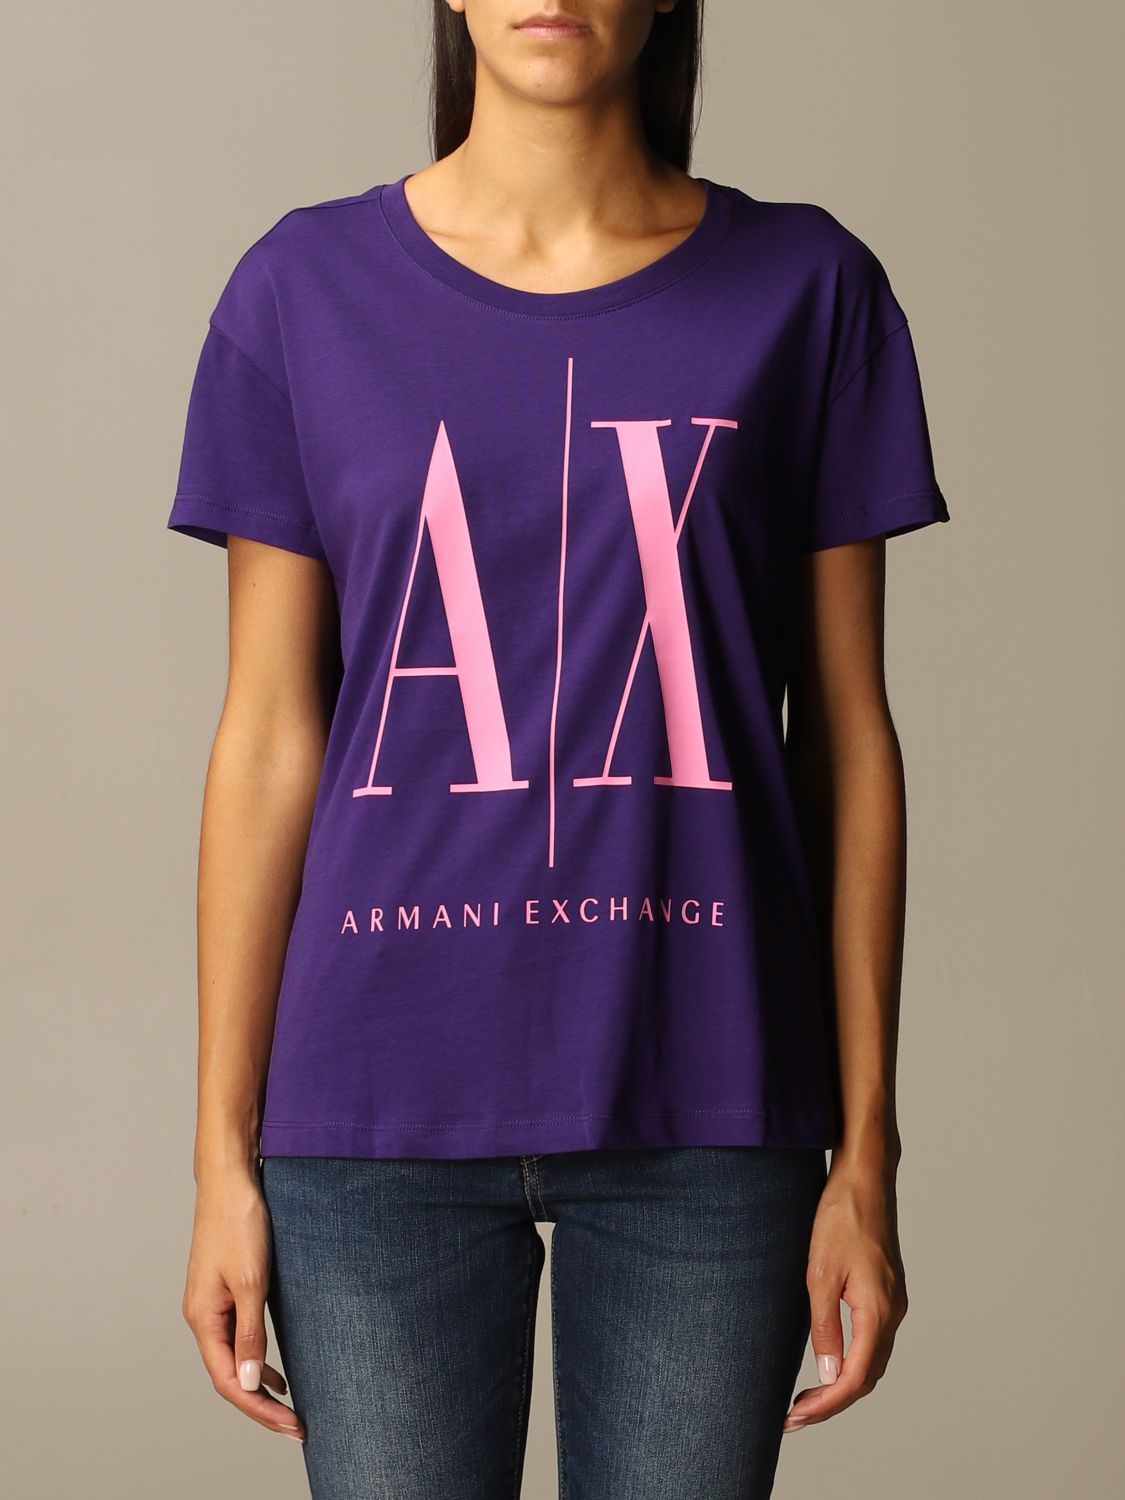 vervolging geïrriteerd raken salami Armani Exchange Outlet: Icon over logo half sleeve crewneck - Violet |  Armani Exchange t-shirt 8NYTCX YJG3Z online on GIGLIO.COM